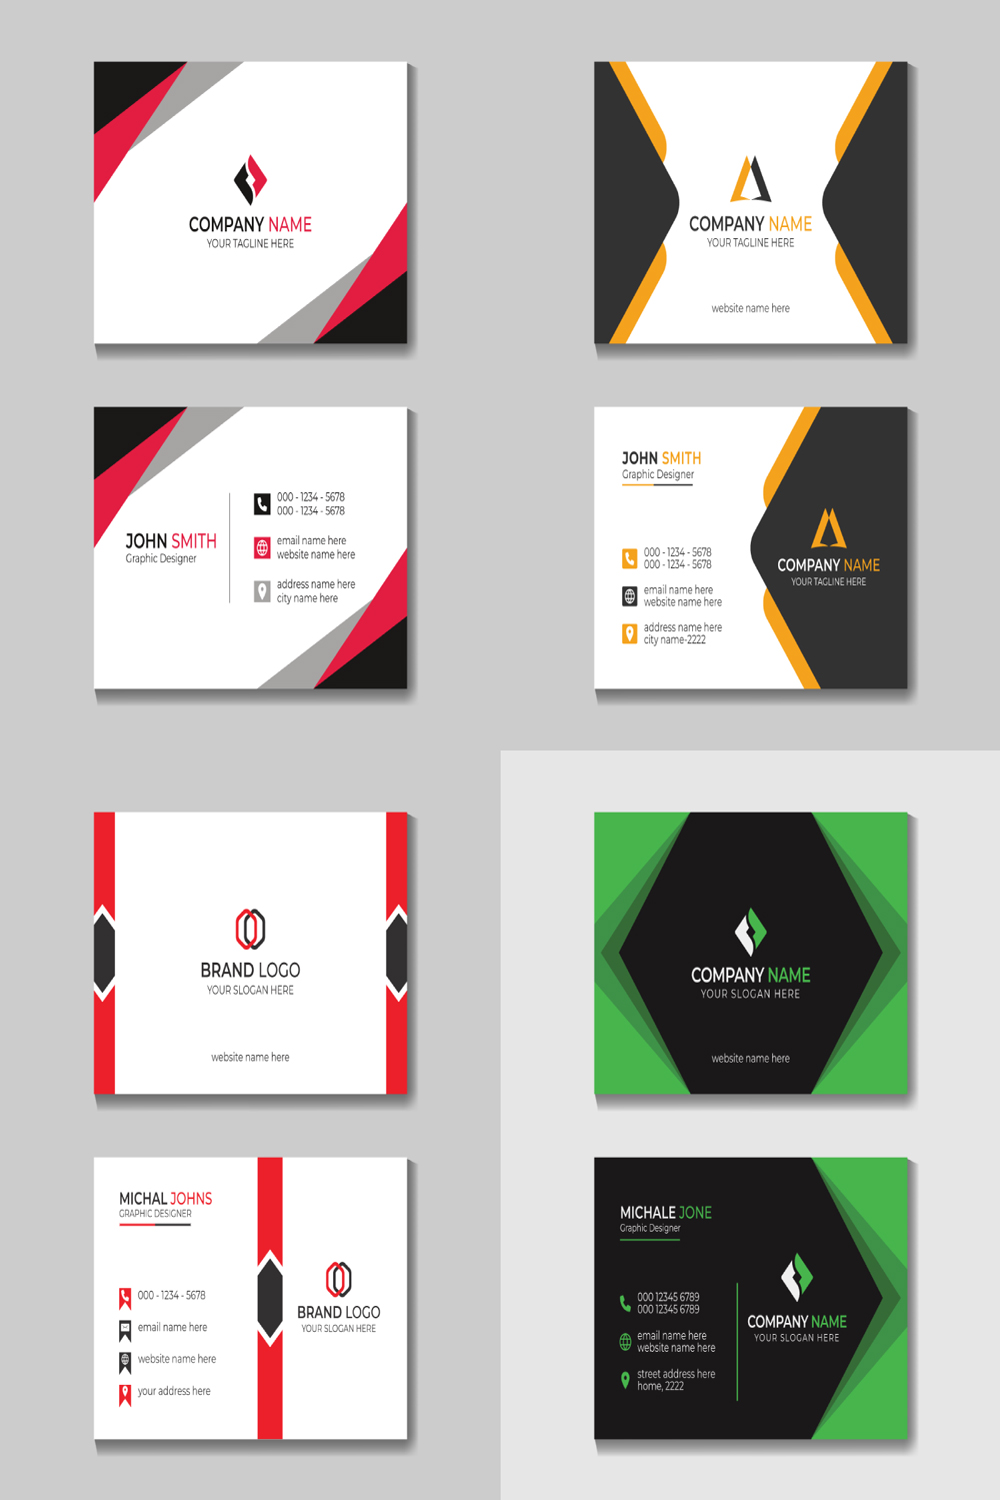 4 Corporate Modern Business Card Design Template Pinterest Image.